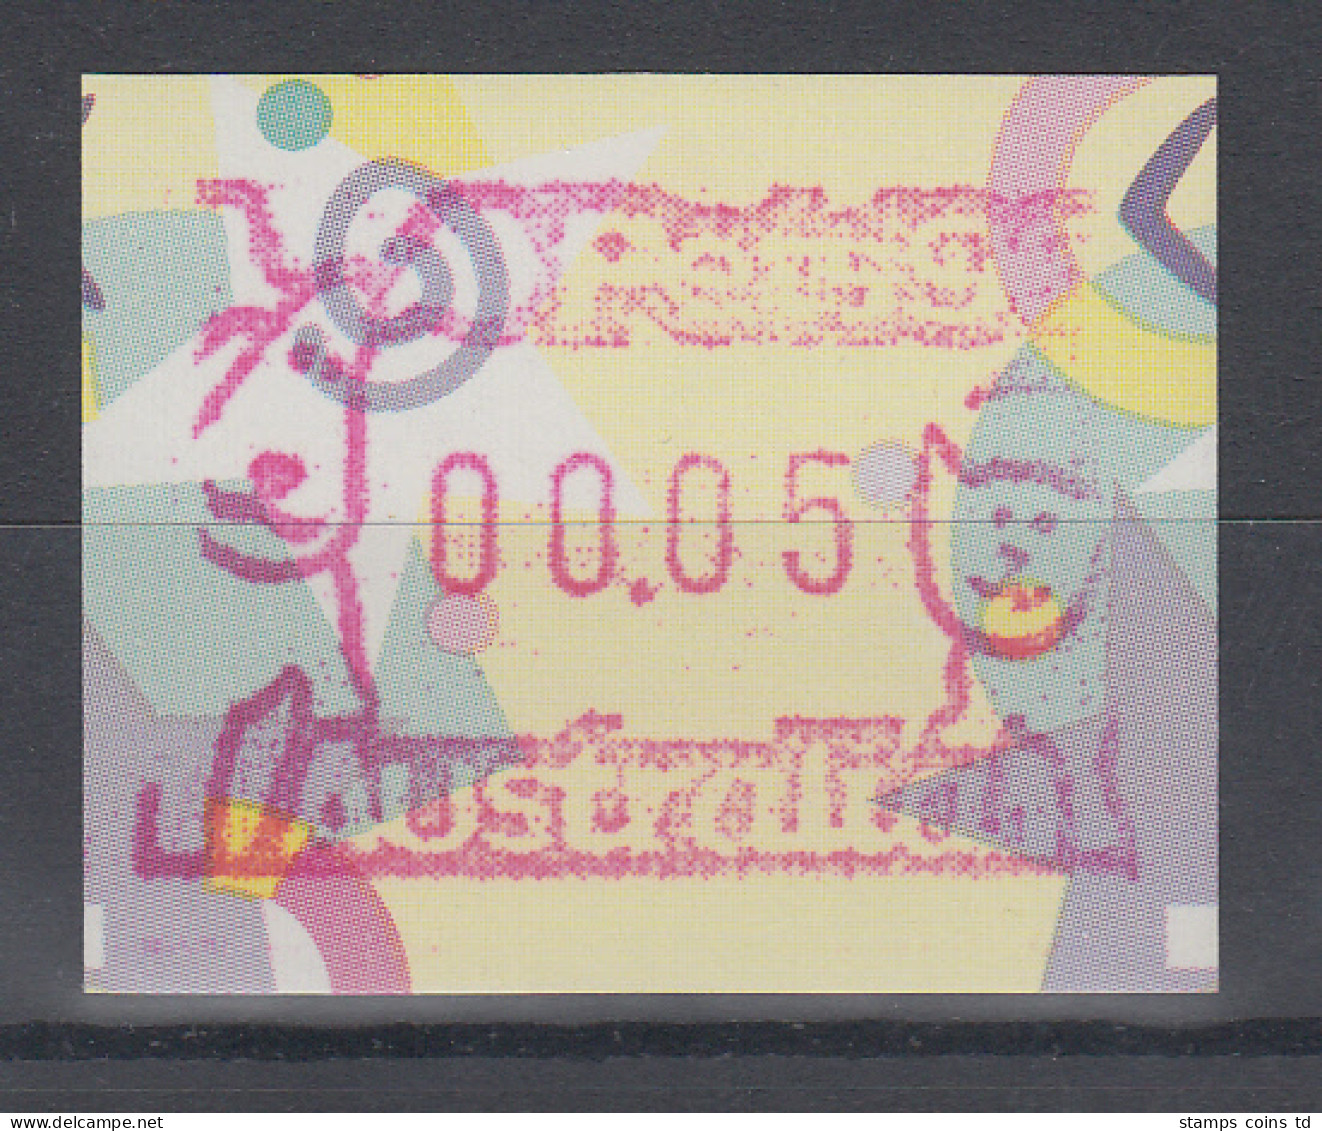 Australien Frama-ATM "Festive Frama"  Sonderausgabe Pets 96  ** - Machine Labels [ATM]